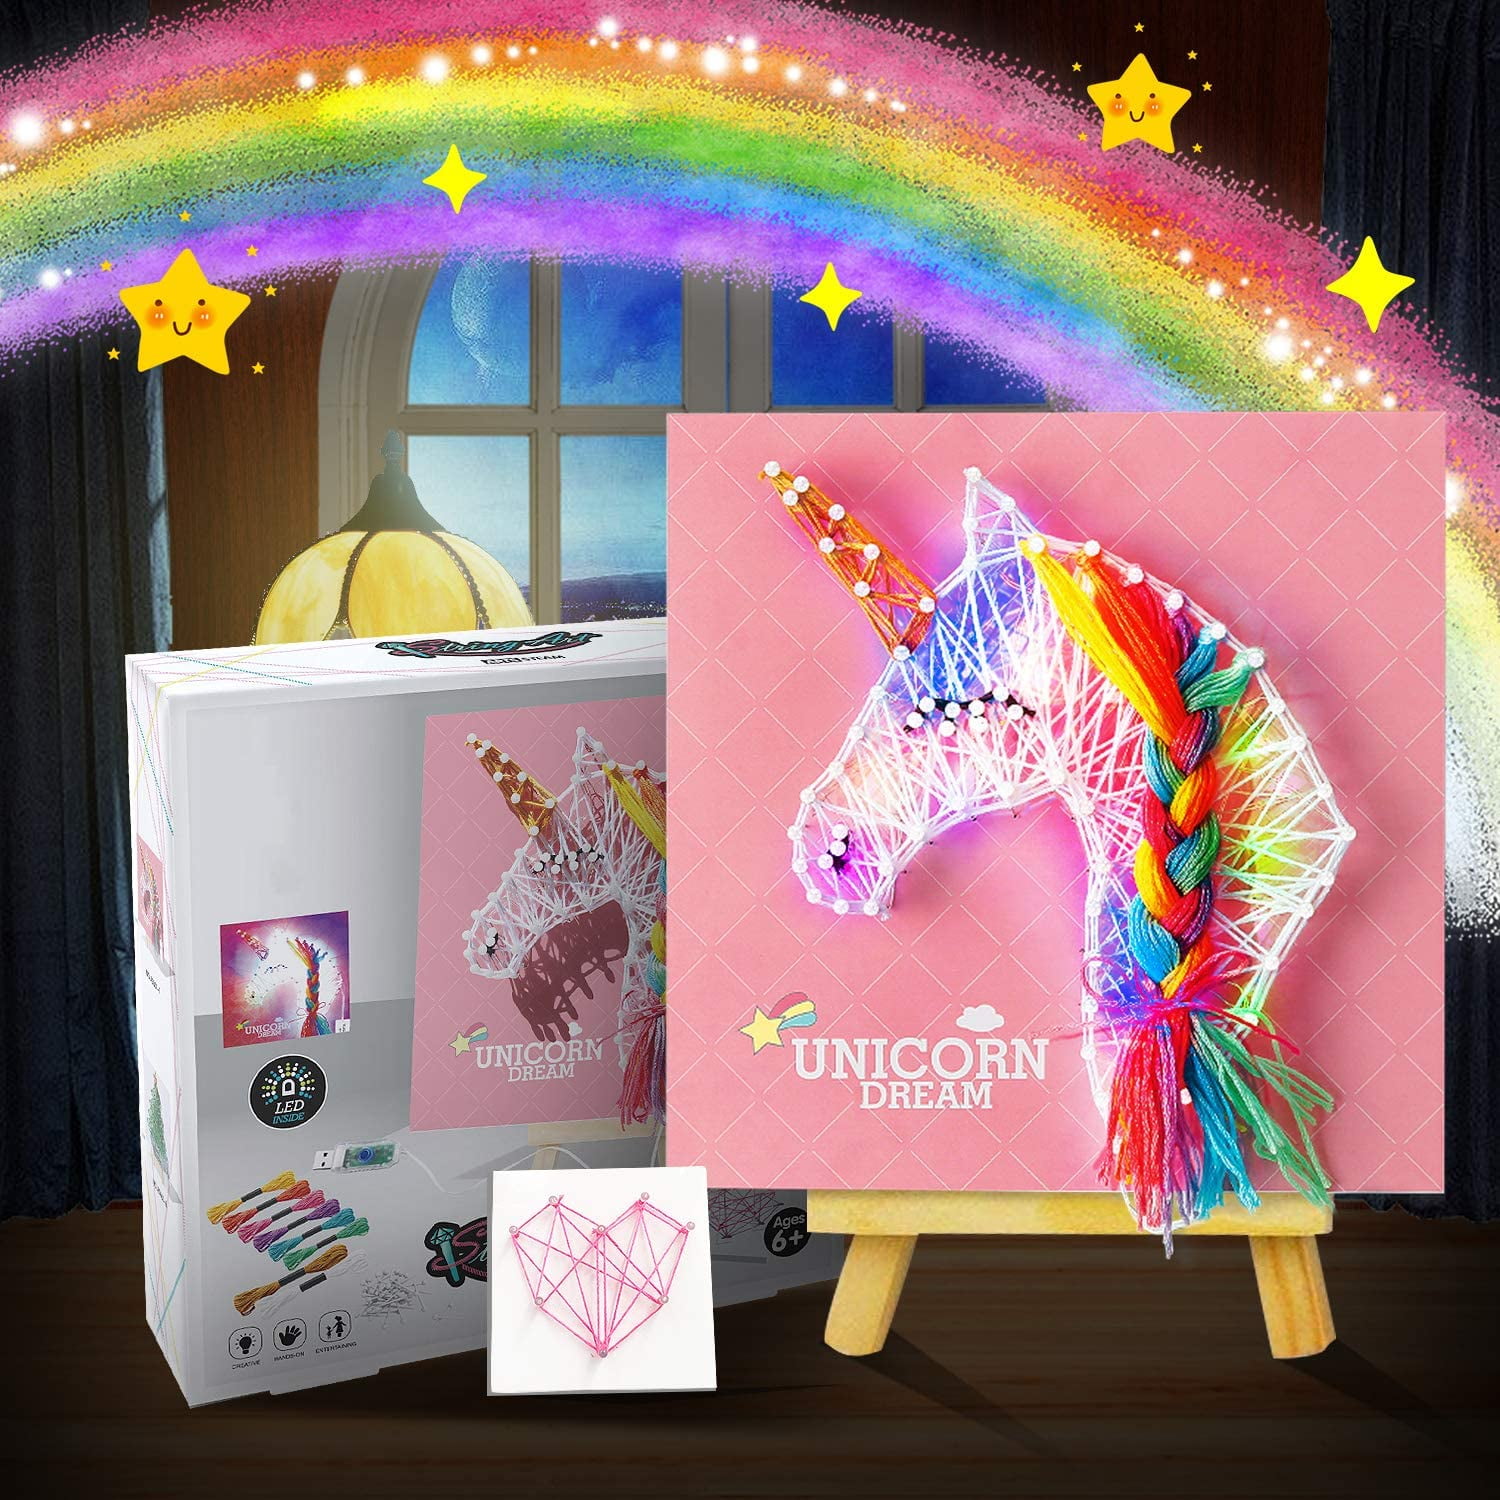 I love Unicorns – Arts & Craft Kit (includes 3 projects)